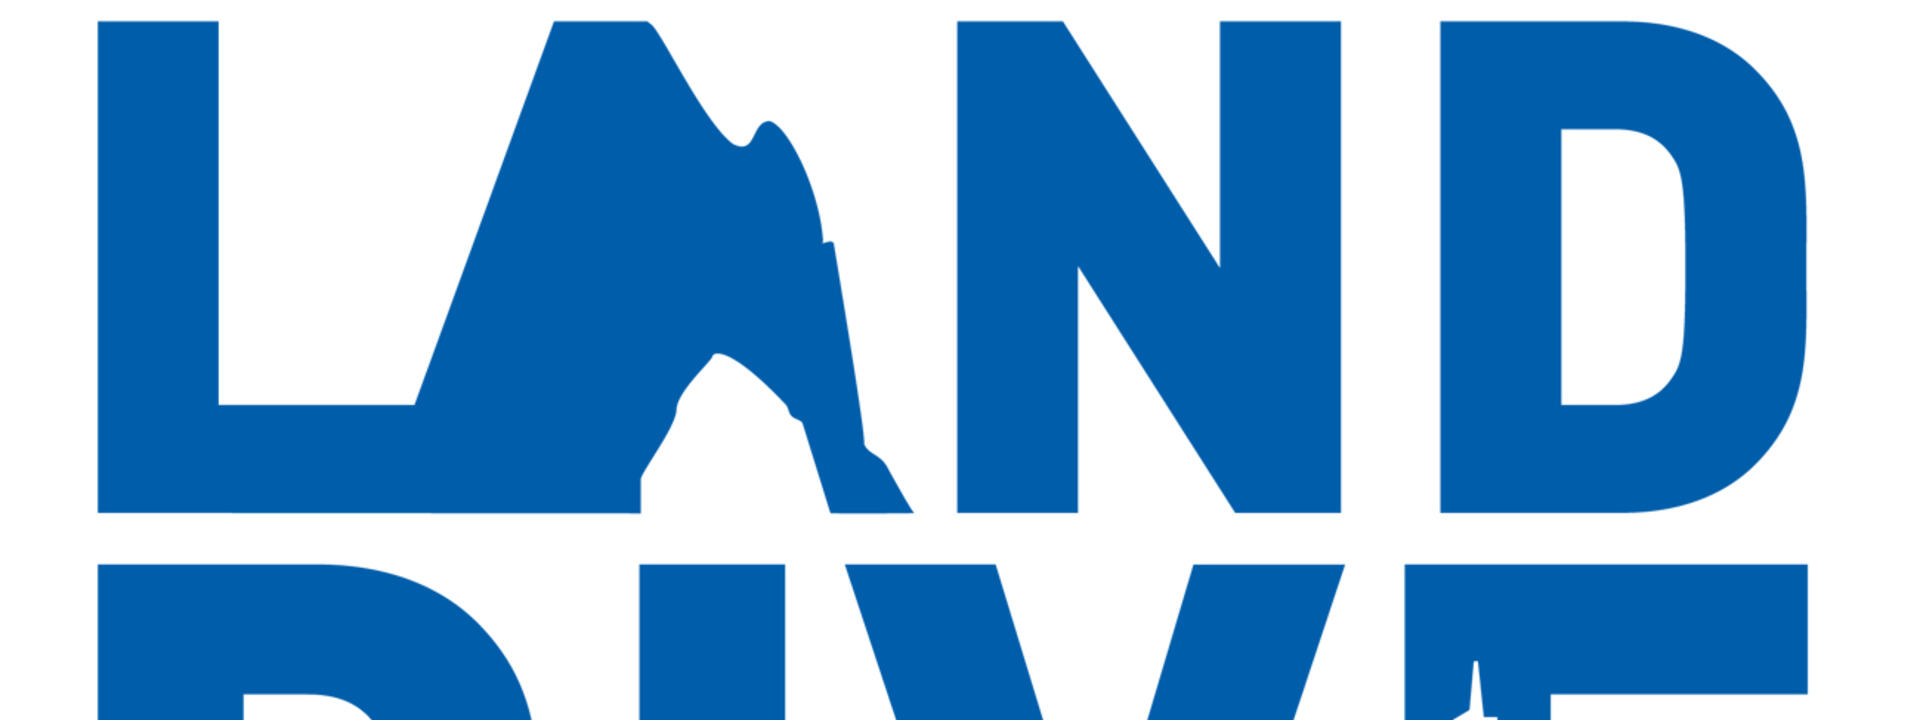 northlanddive-logo.jpg